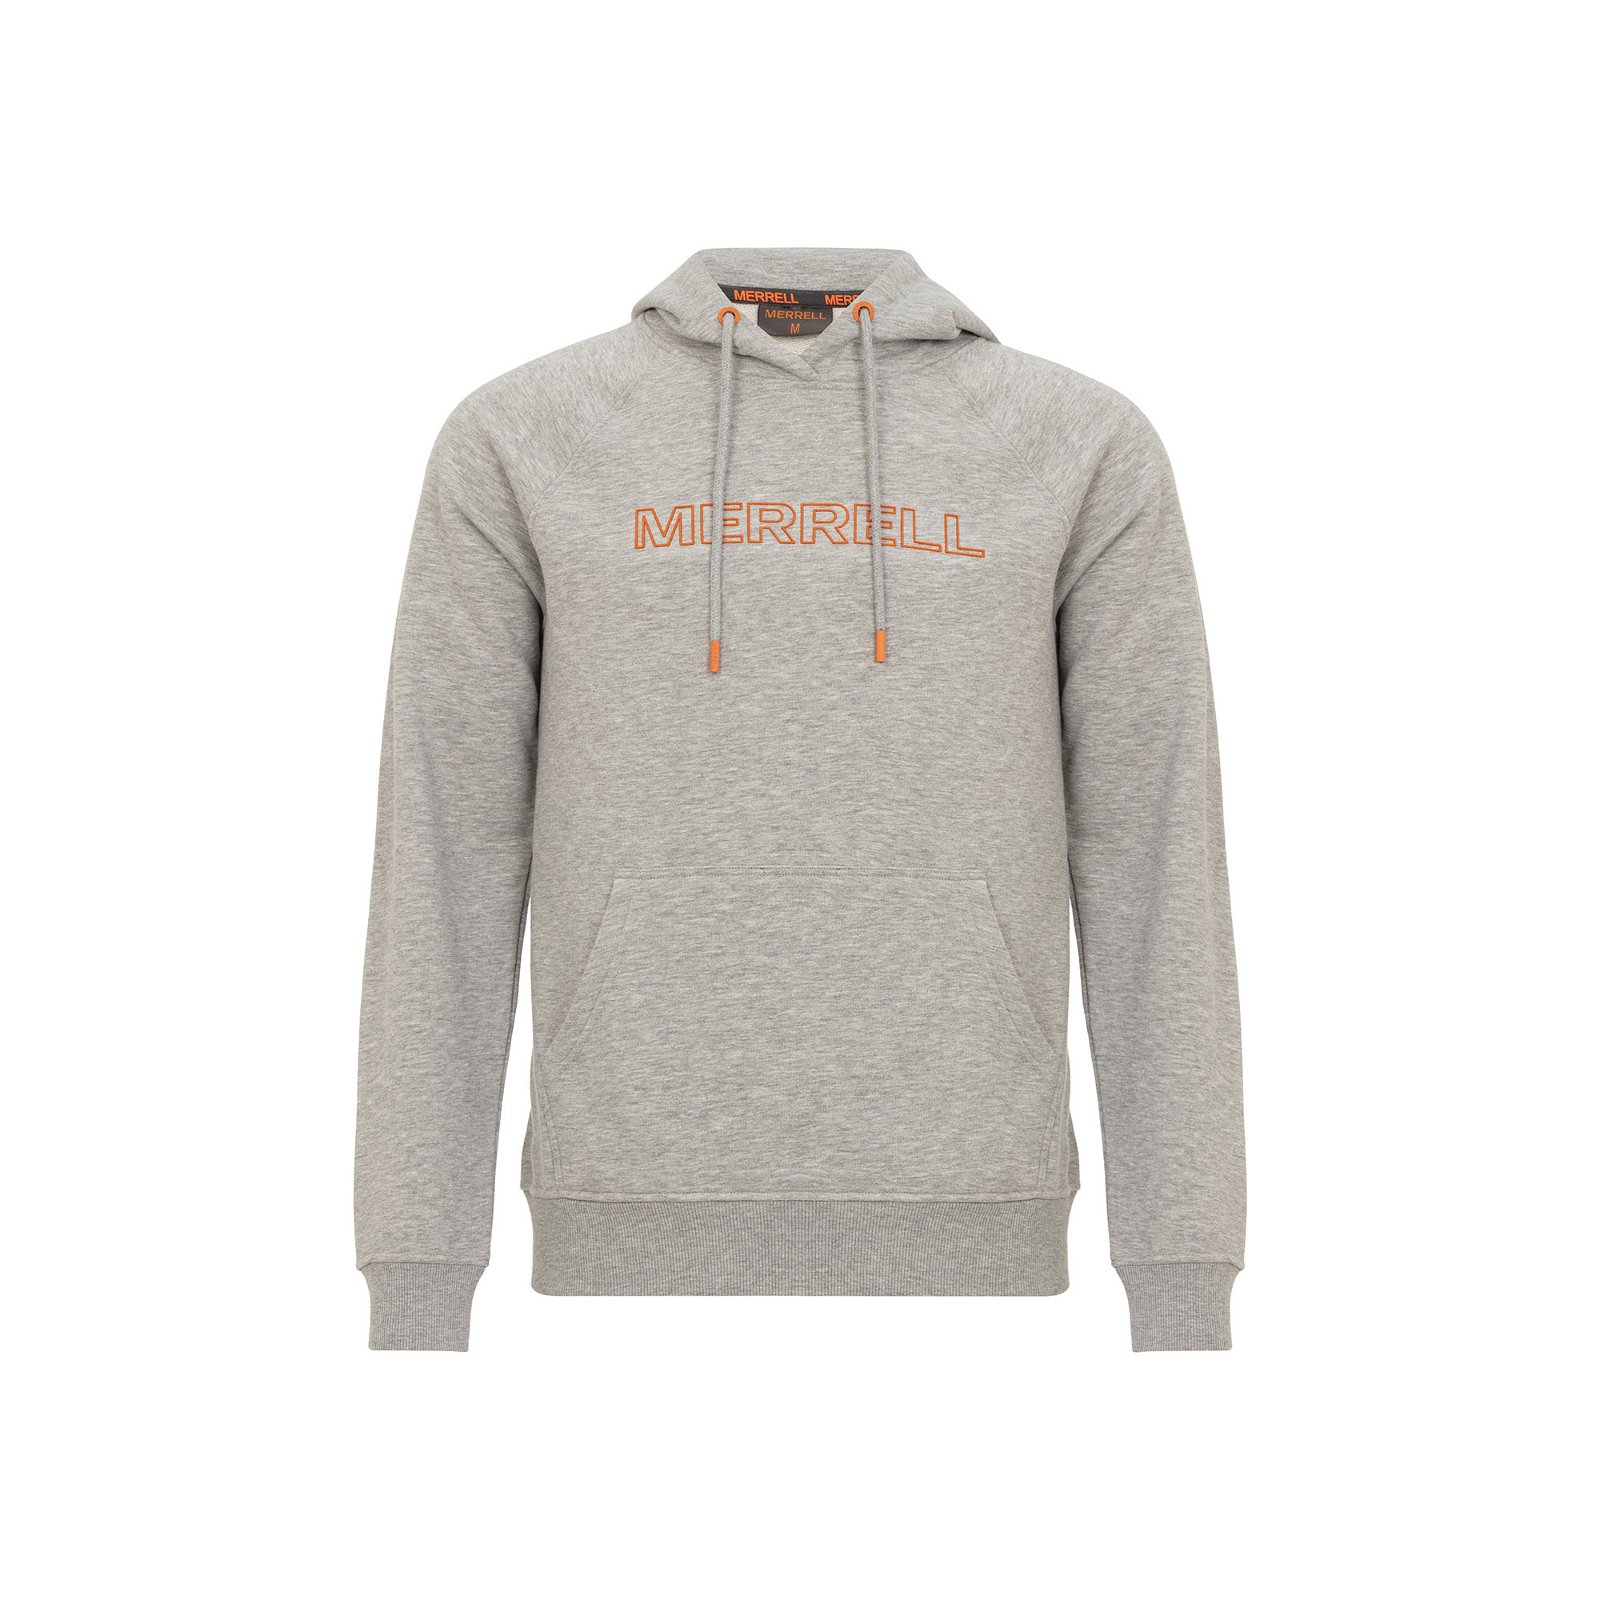 Merrell Subject Erkek Sweatshirt - Gri - 1